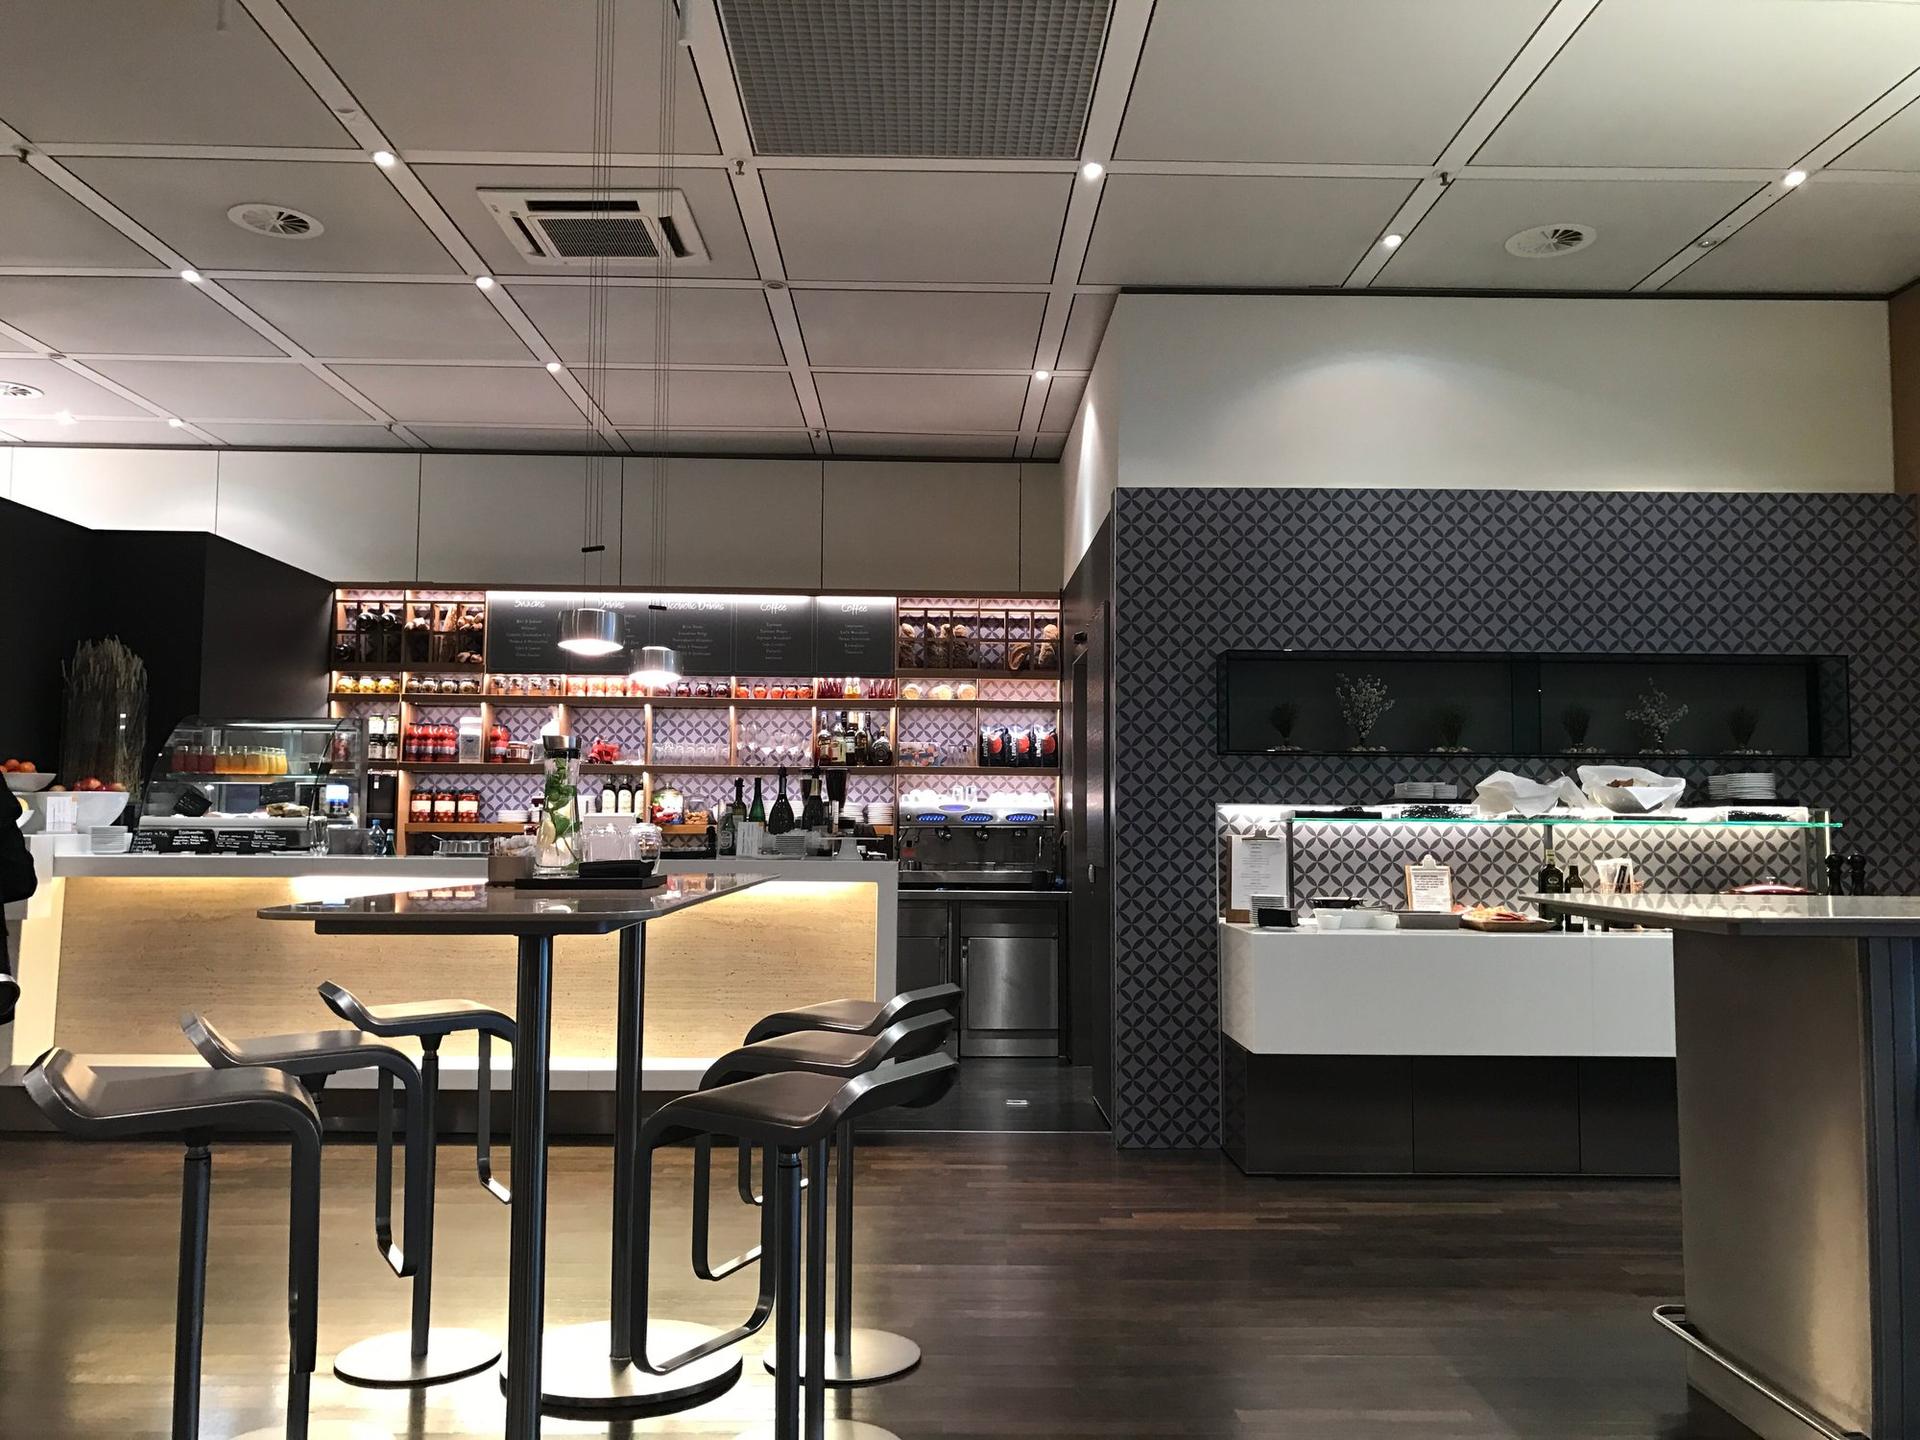 Lufthansa Senator Café Lounge (Schengen) image 2 of 6